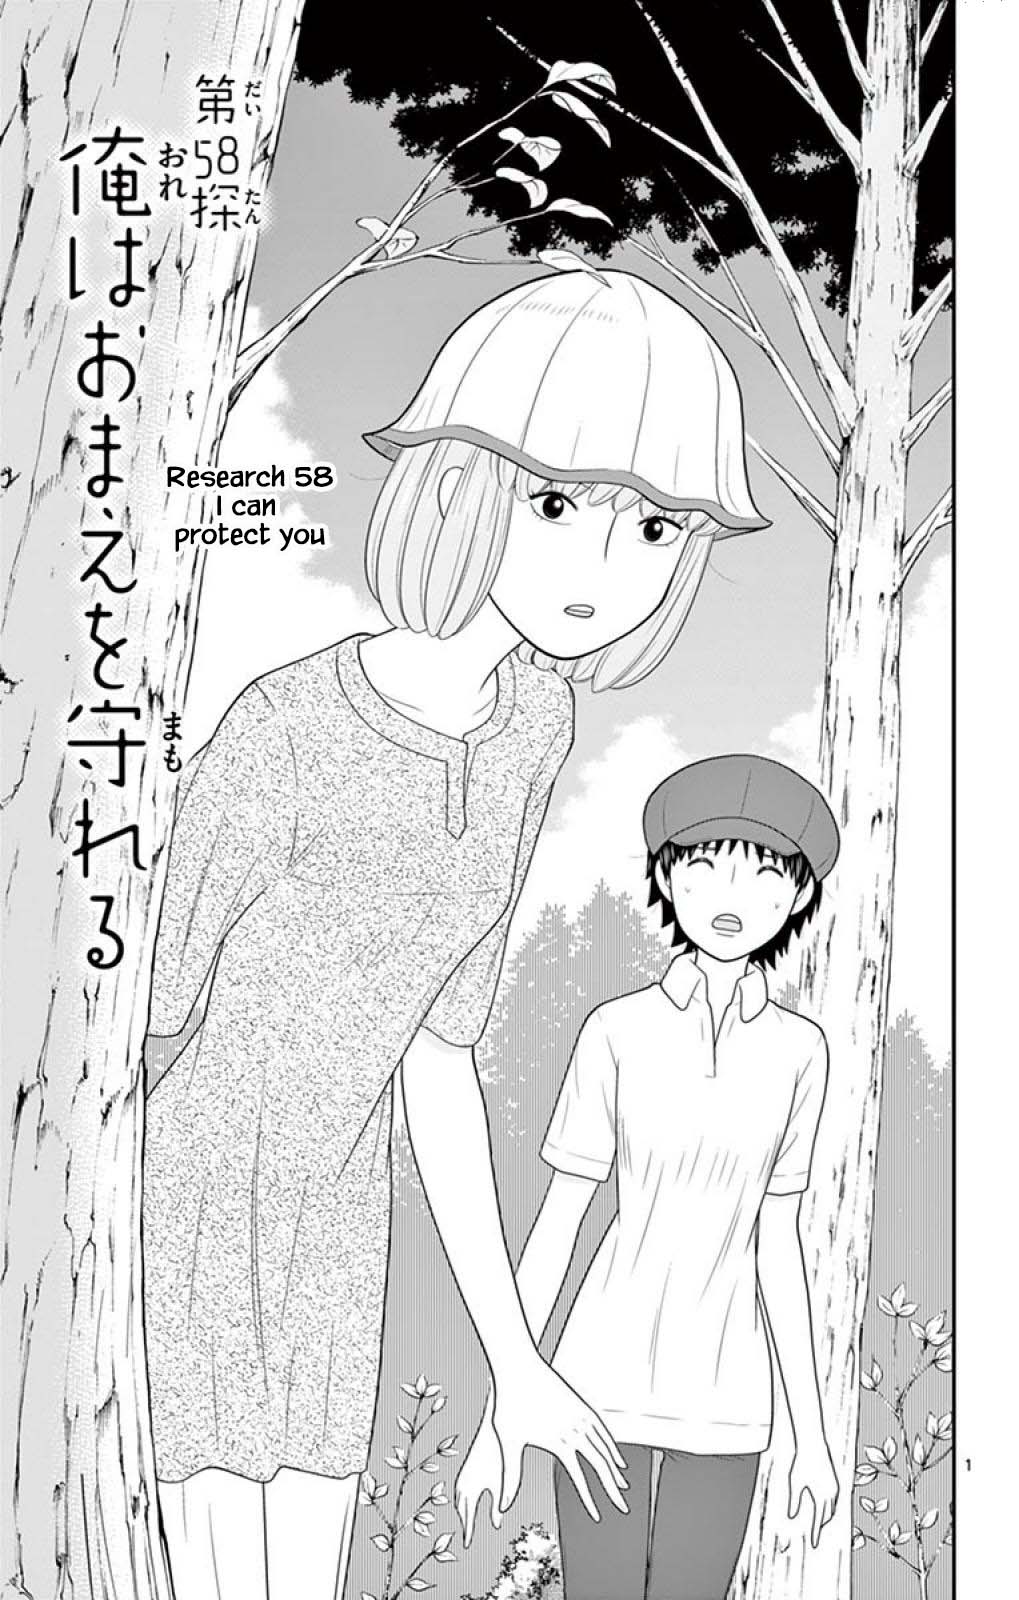 Hiiragi-Sama Is Looking For Herself - chapter 58 - #1